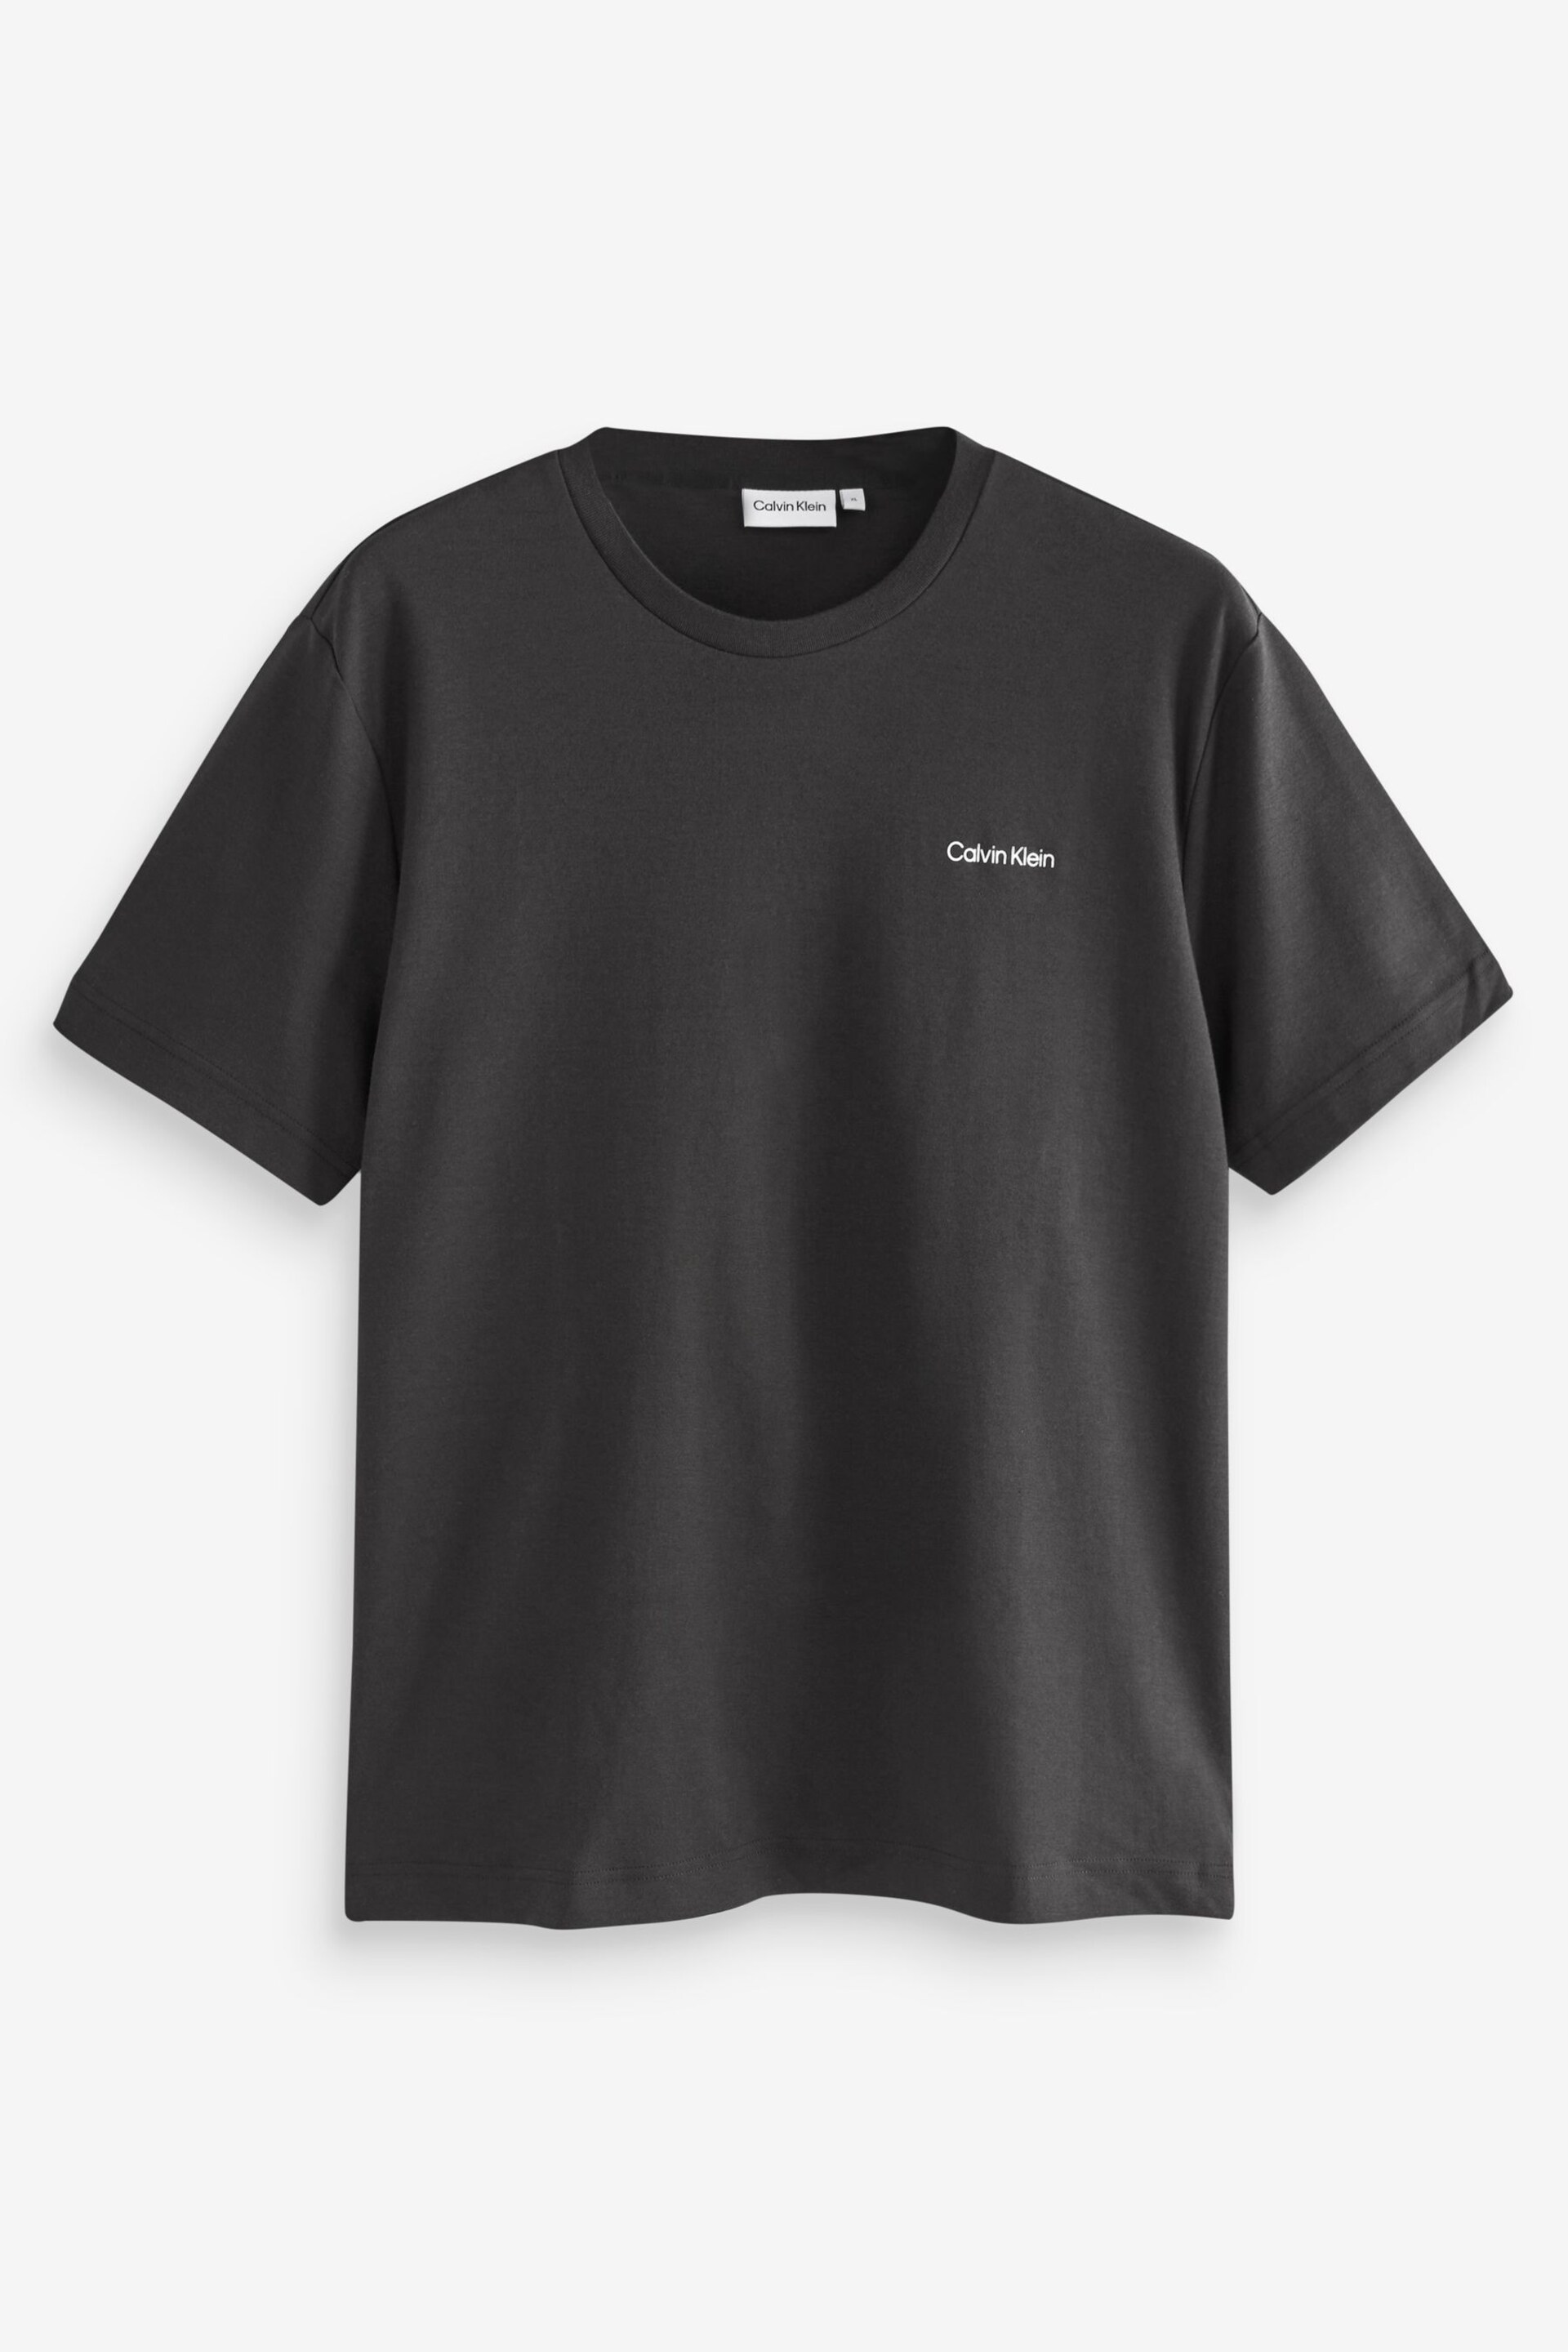 Calvin Klein Black Micro Logo T-Shirt - Image 4 of 4